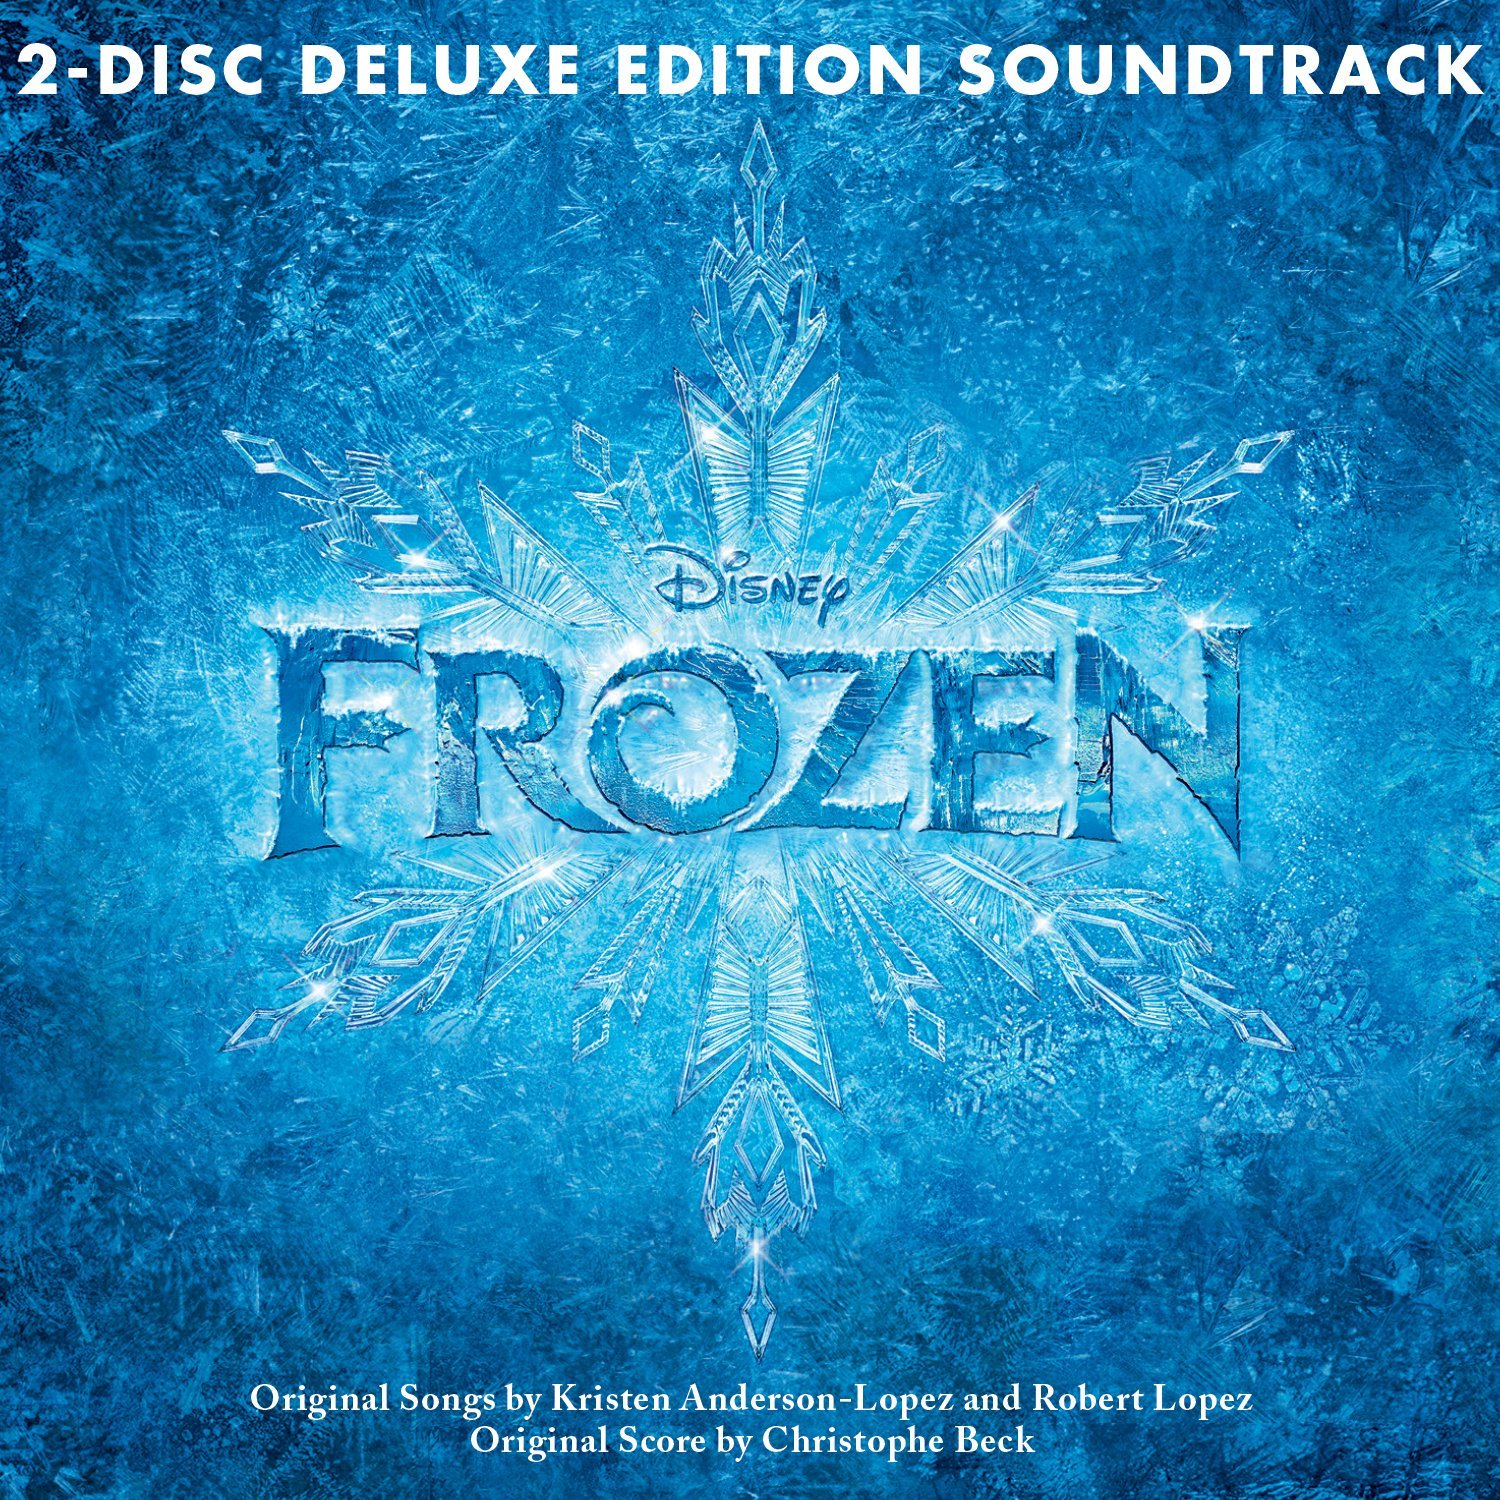 disney-frozen-soundtrack-music